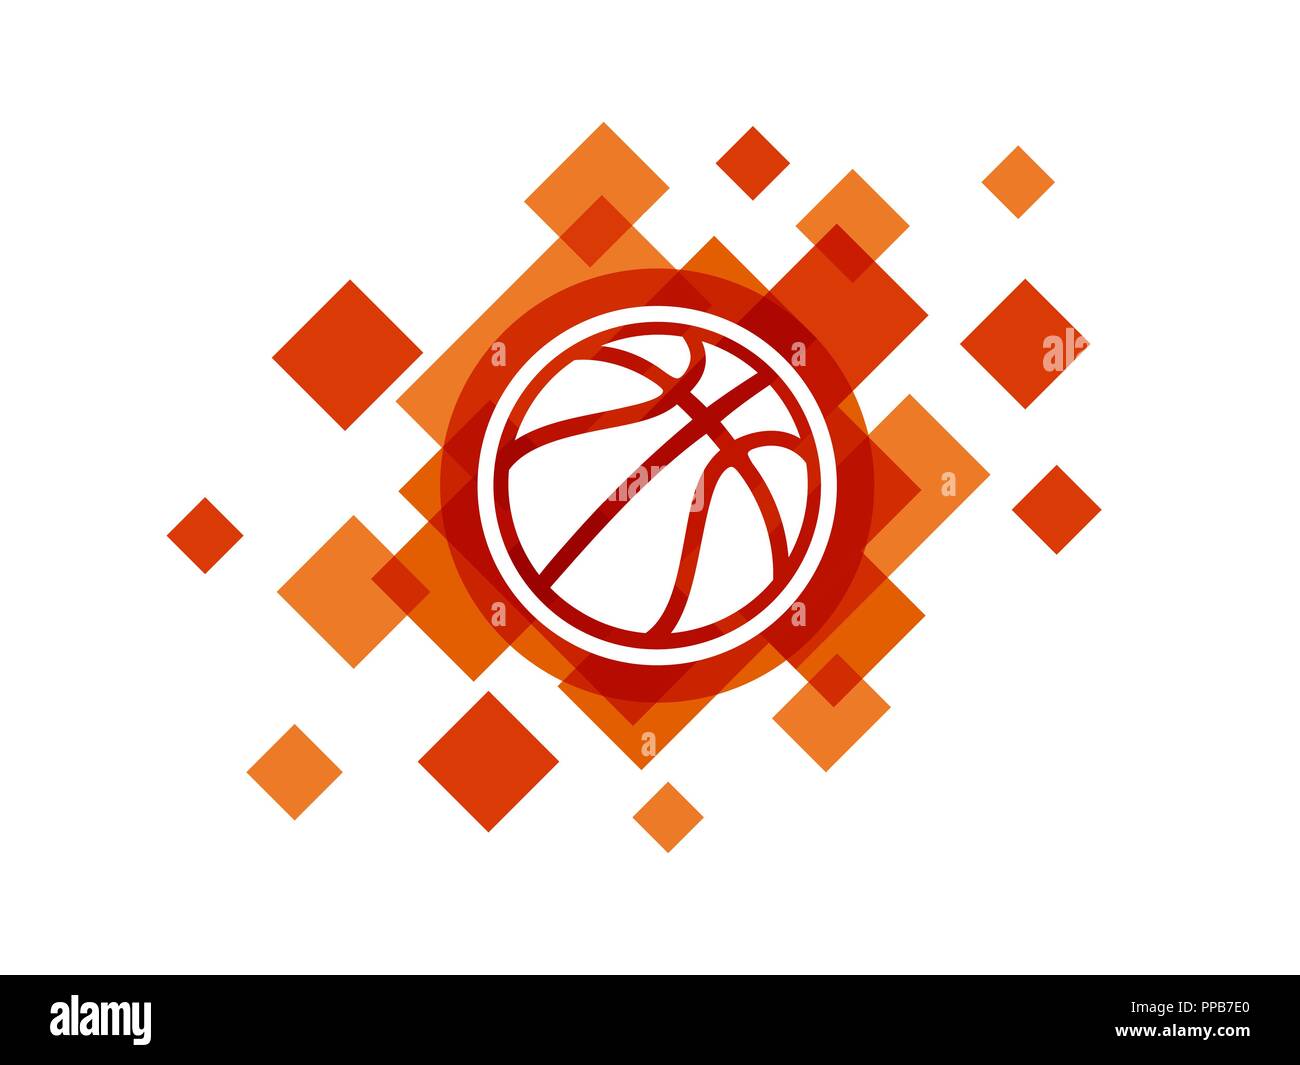 Basketball ball on orange abstract background vector icon logo Stock Vector